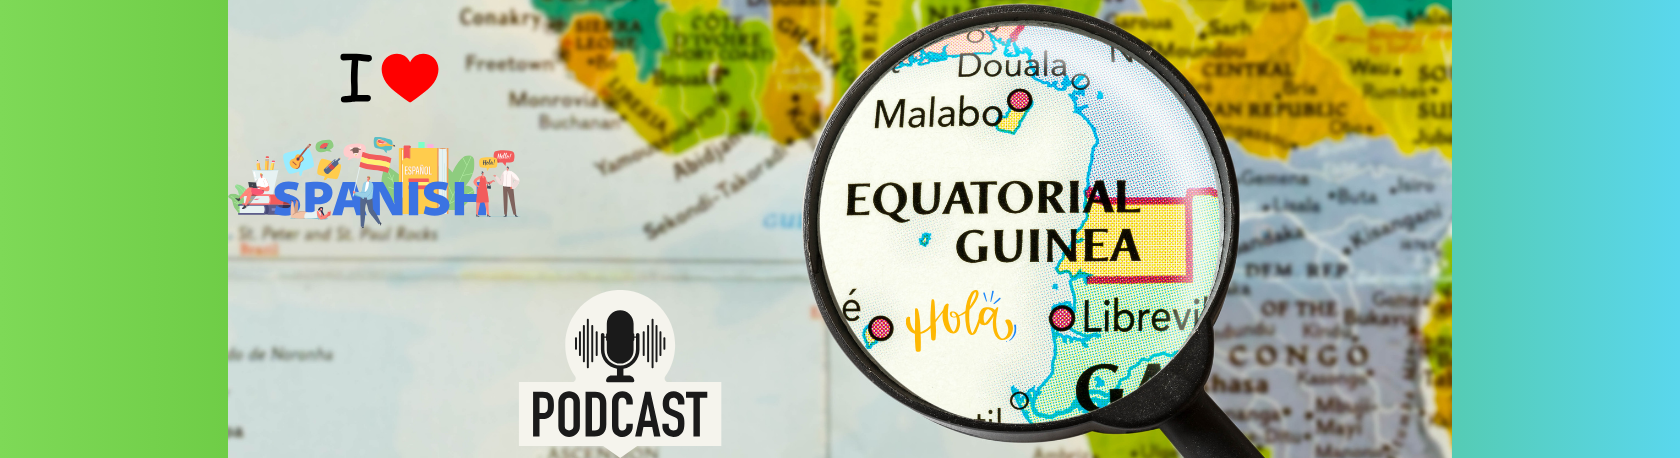 Enrich your Spanish listening skills: At Equatorial Guinea 'Se habla español' - Learn Spanish - Speak Spanish - Spanish Podcast - Listen to Spanish - Easy Español